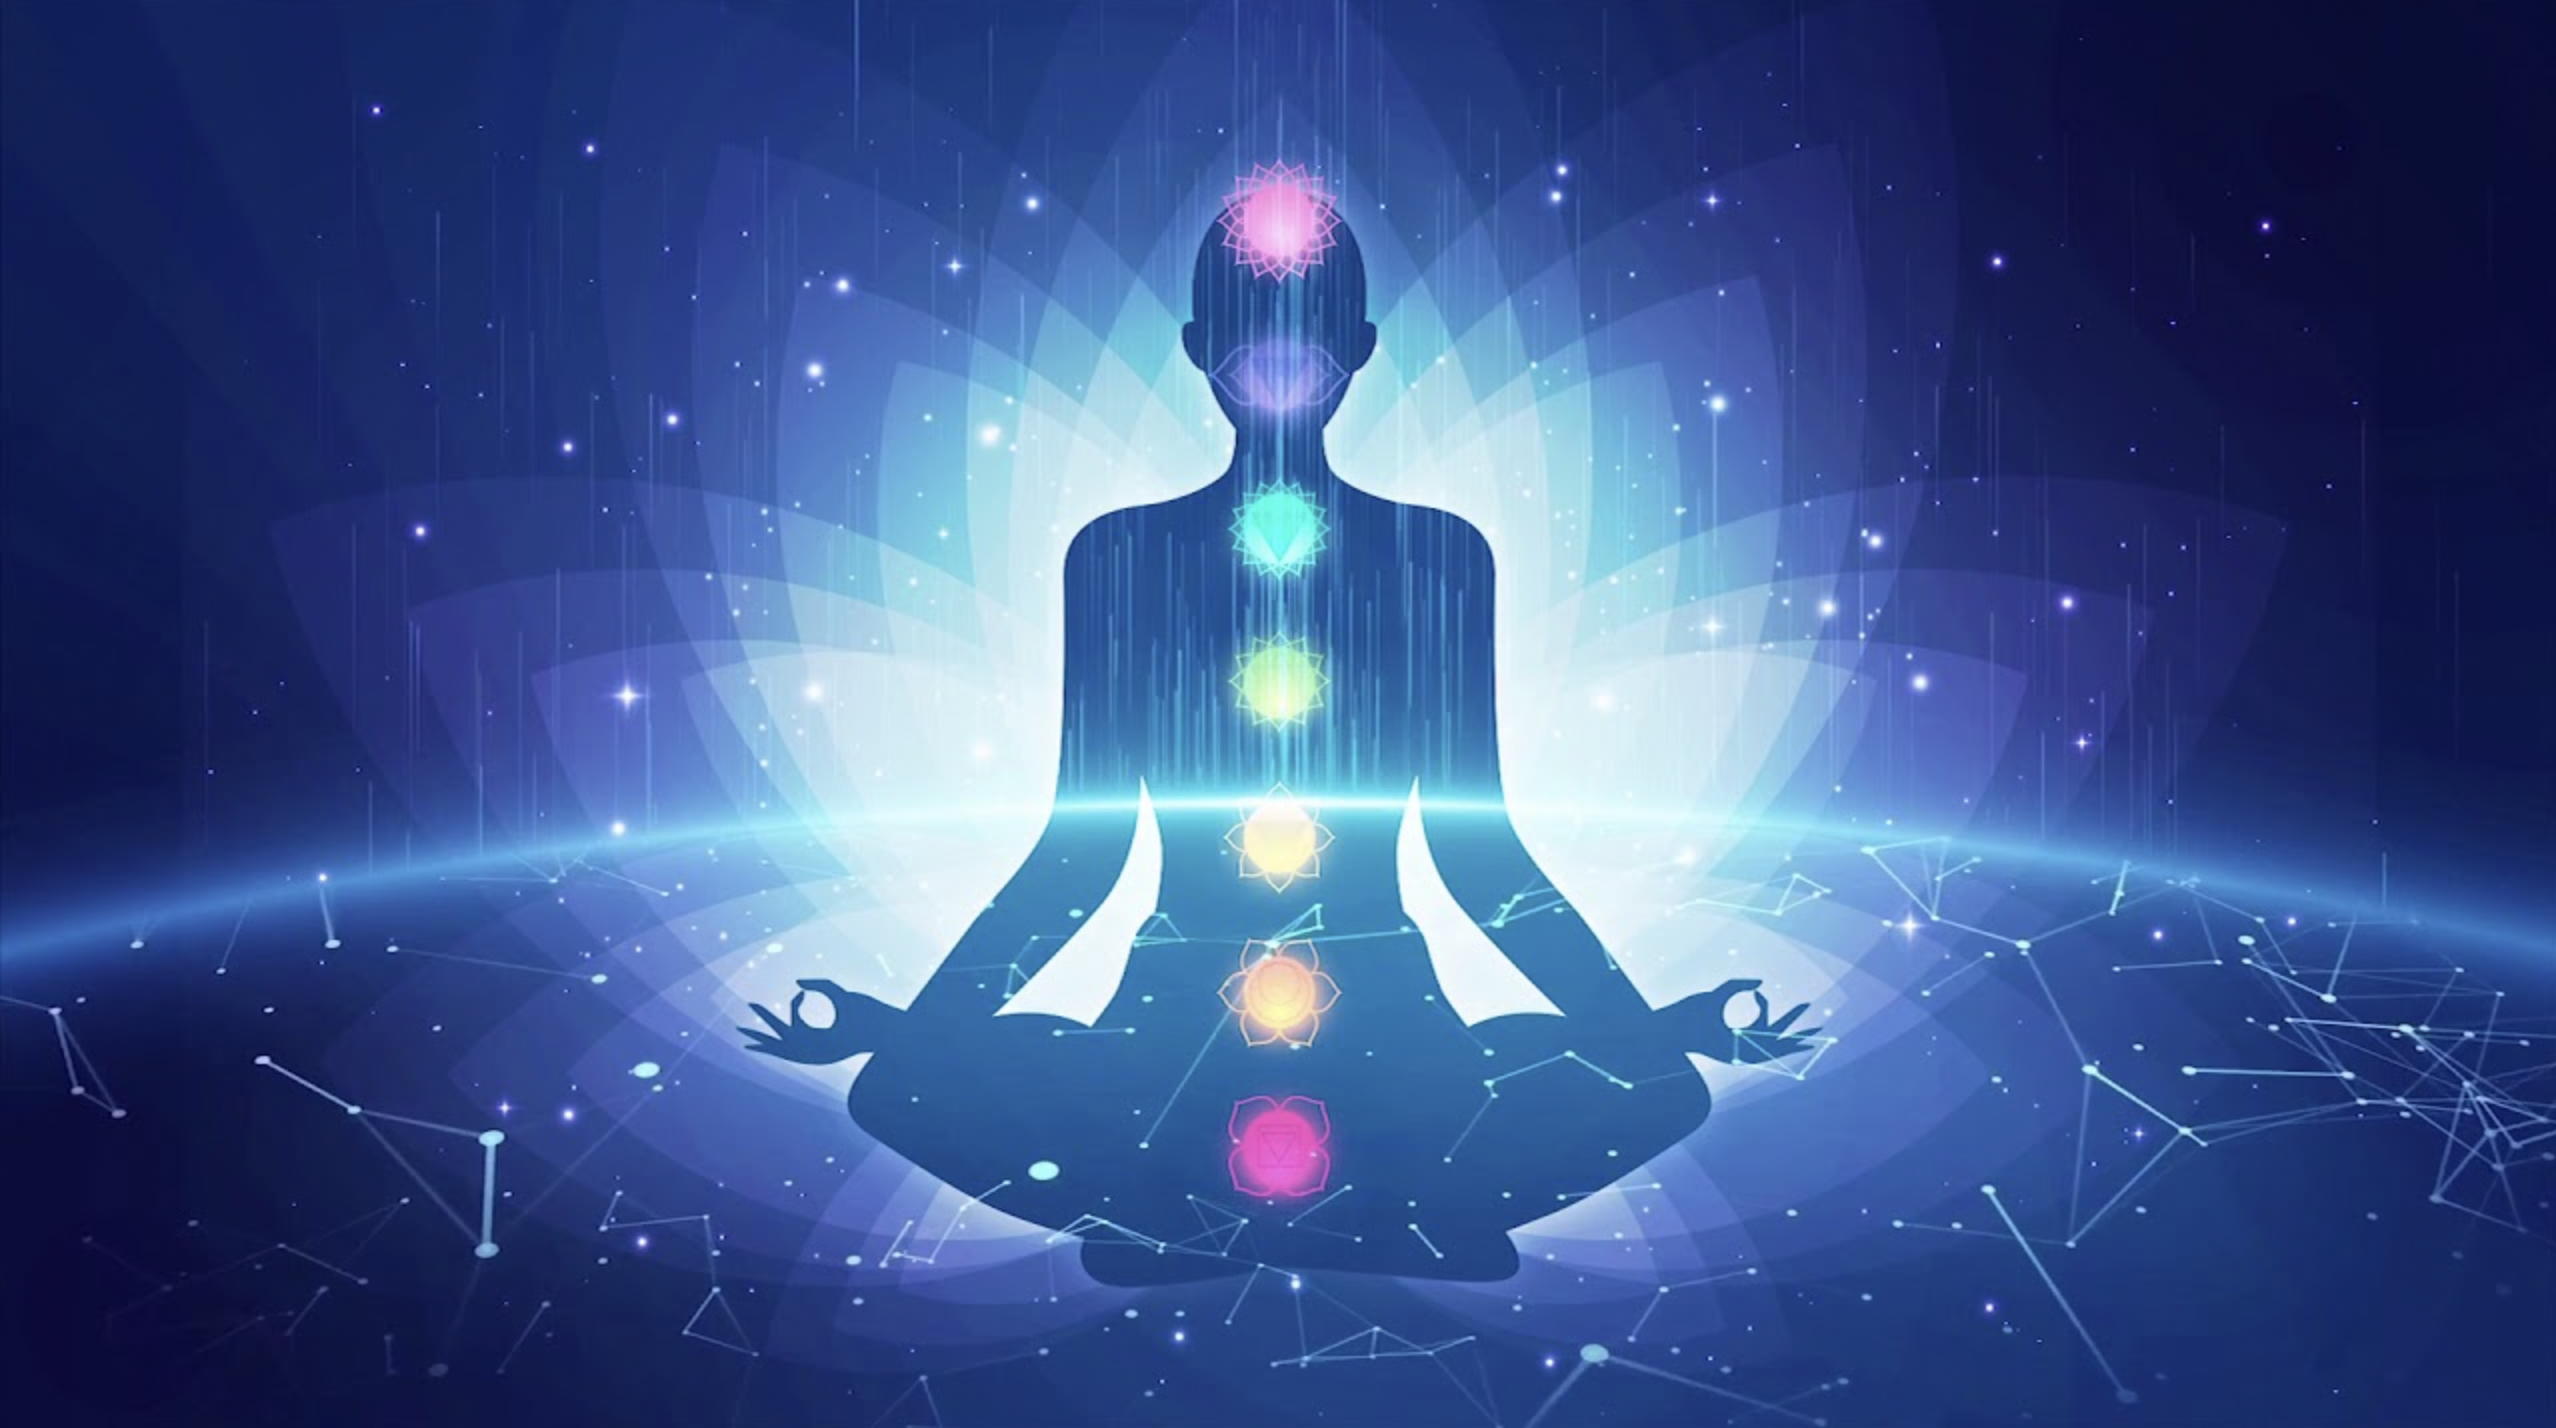 sound healing meditation buddhism star signs chakras